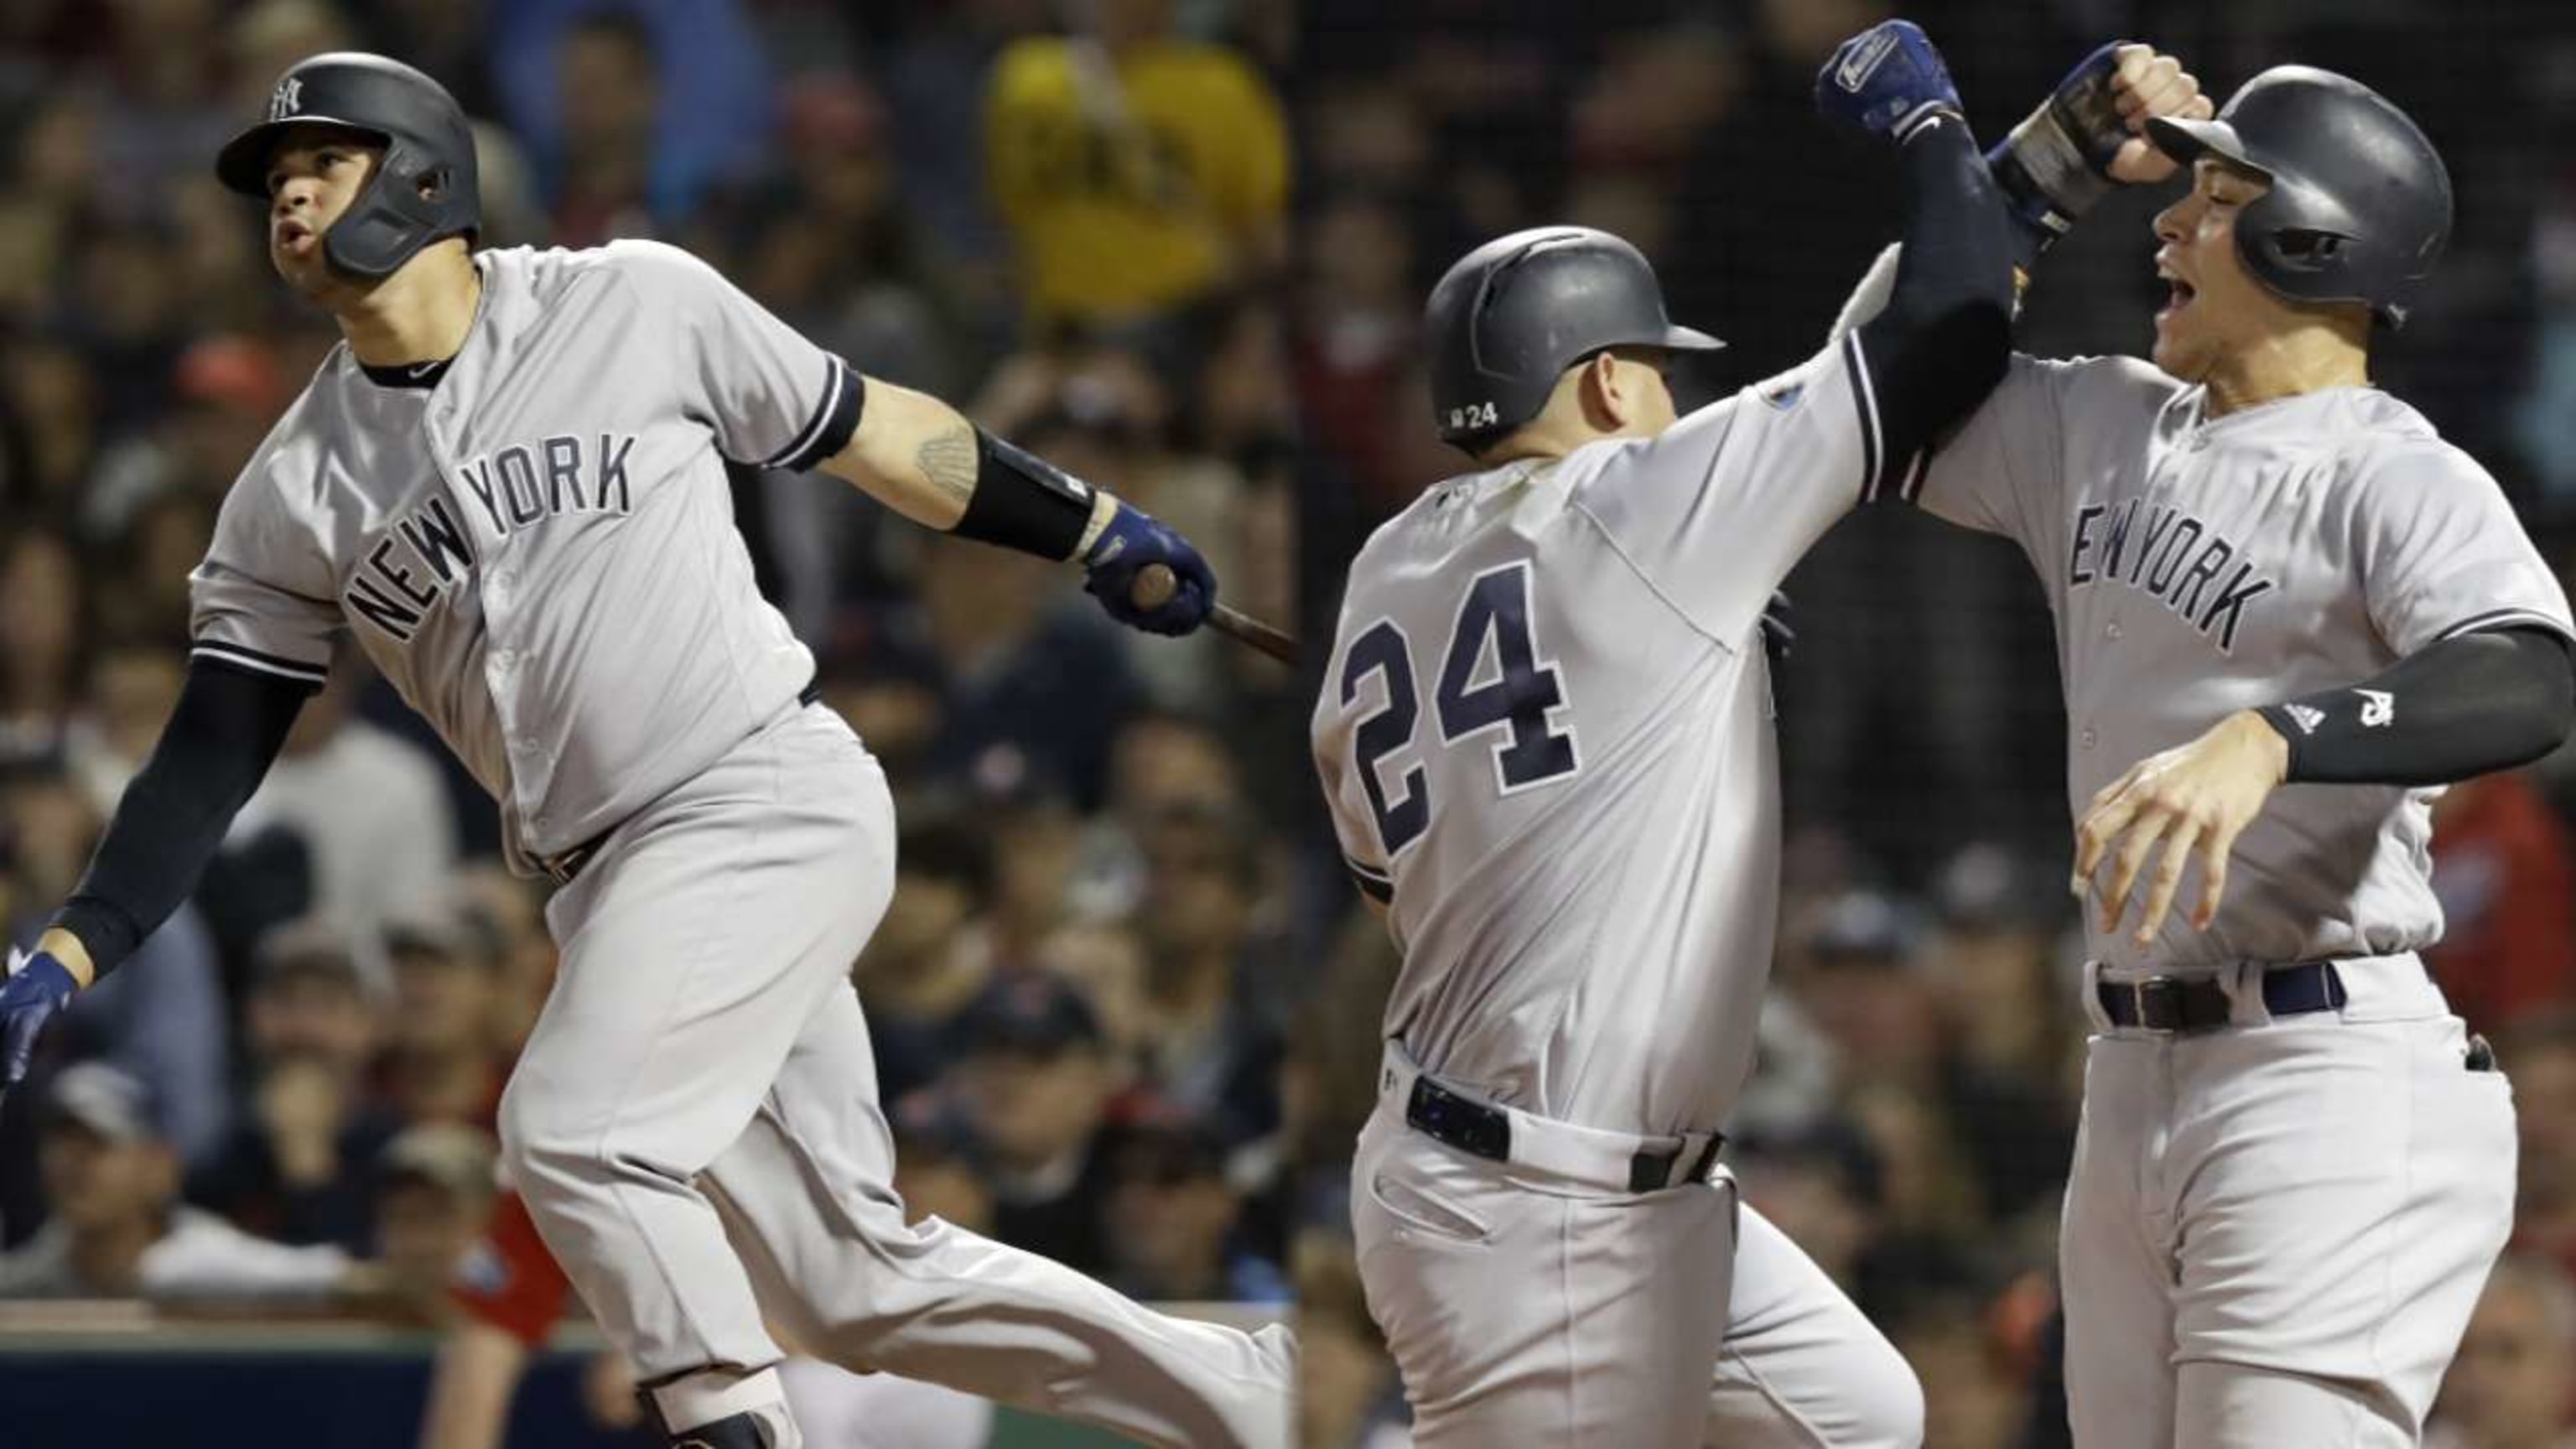 New York Yankees catcher GARY SANCHEZ celebrates his first of 2 home runs